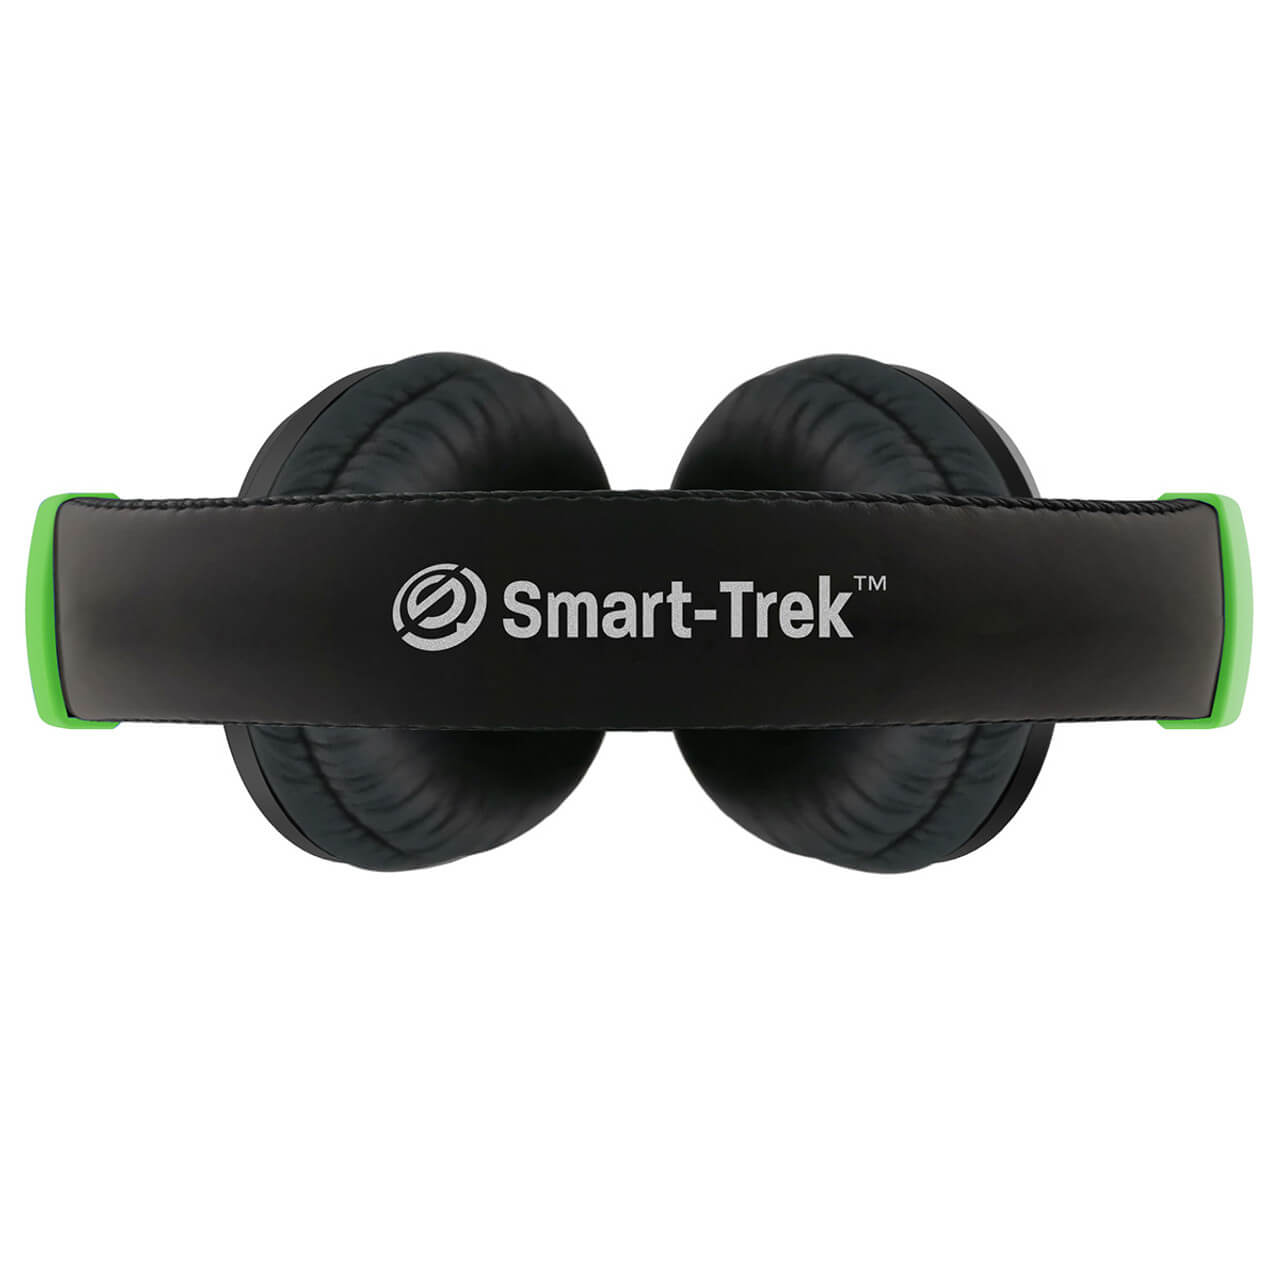 HamiltonBuhl Smart-Trek Headphone - Green Accents